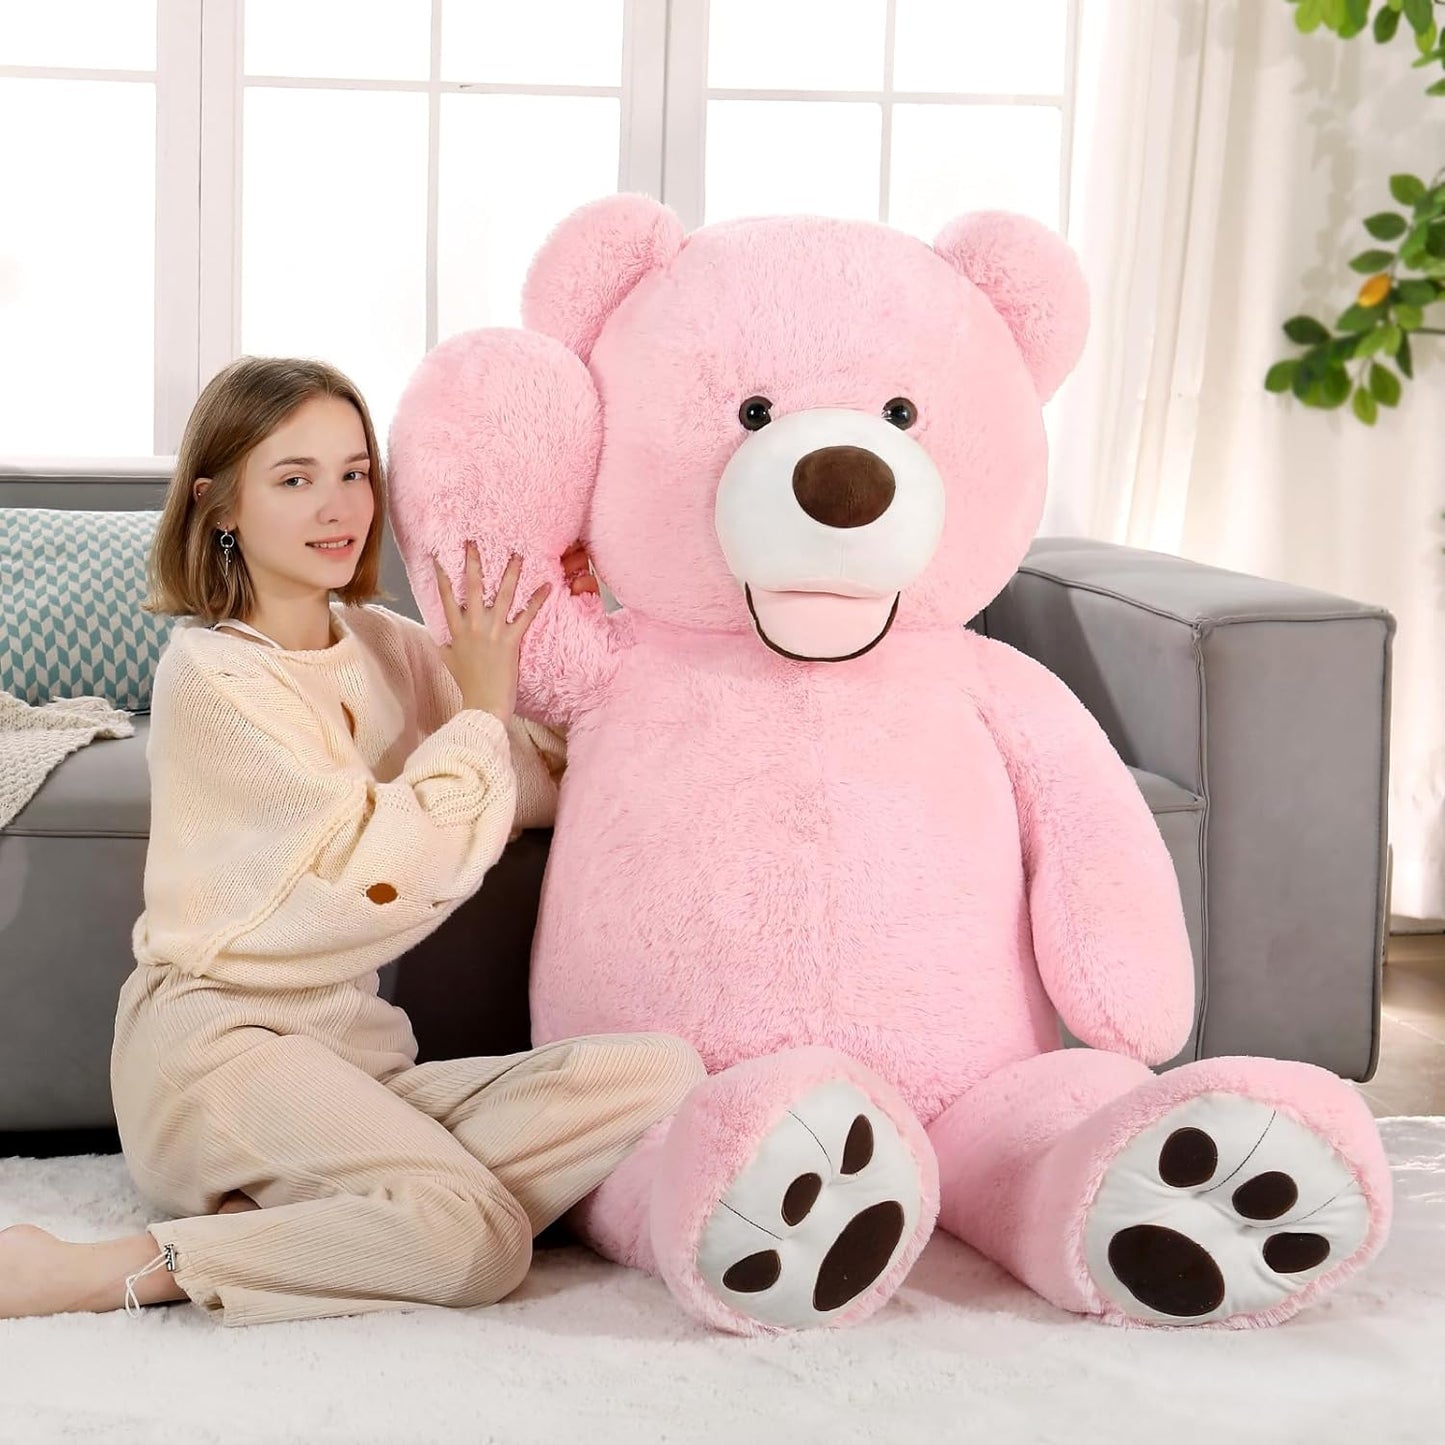 Giant Teddy Bear Stuffed Animal Toy, Pink, 59 Inches - MorisMos Plush Toys